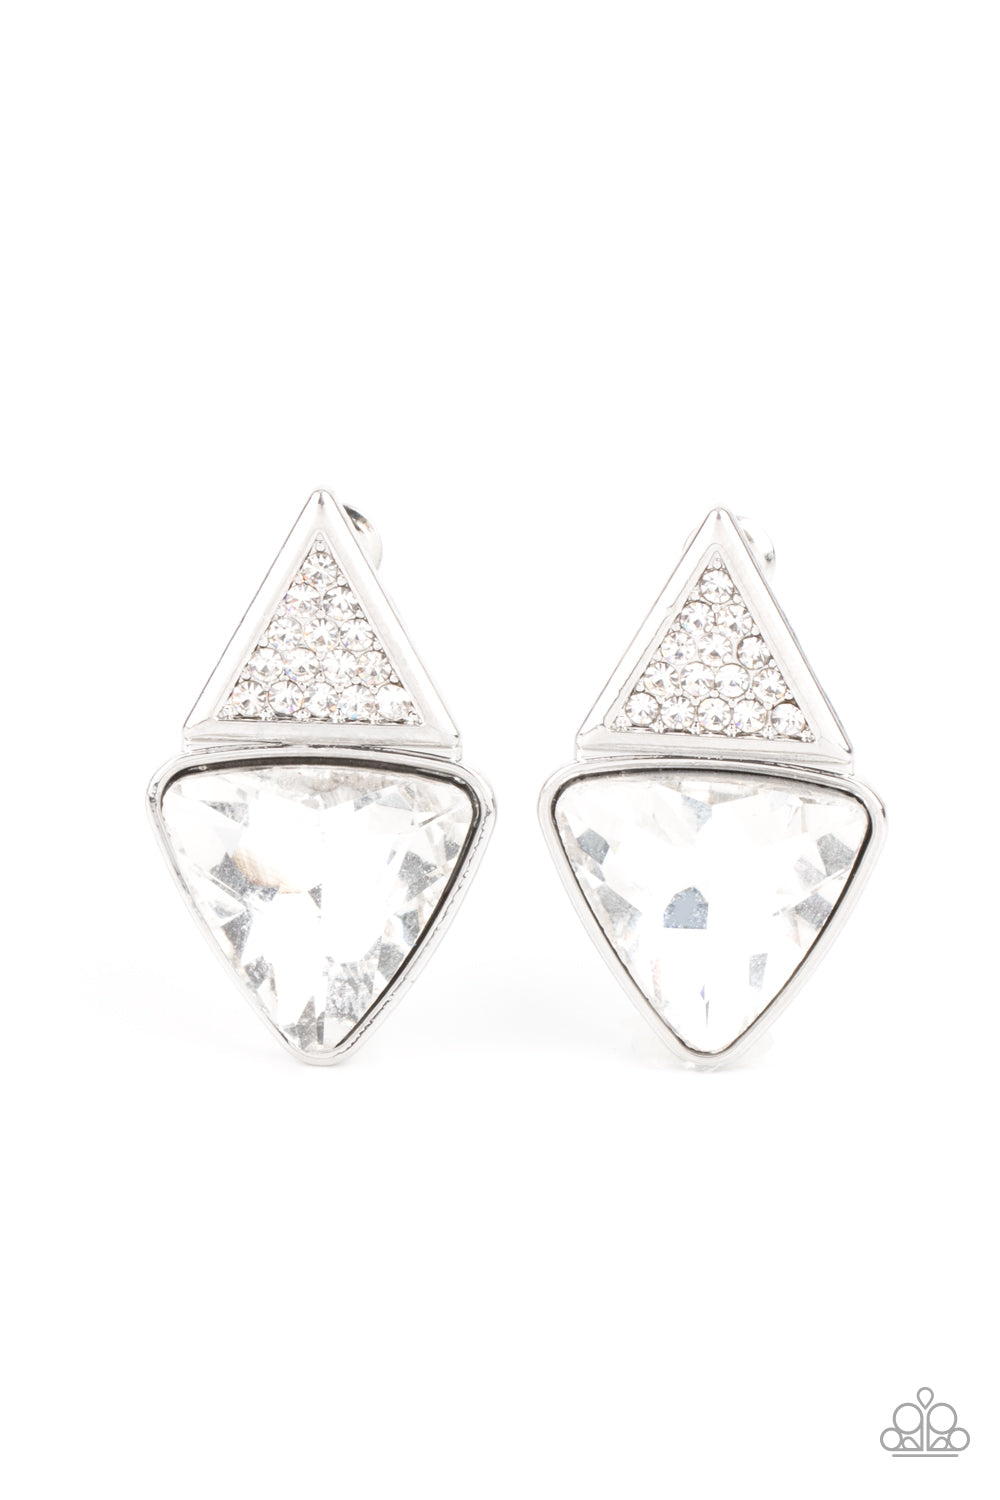 five-dollar-jewelry-risky-razzle-white-post earrings-paparazzi-accessories